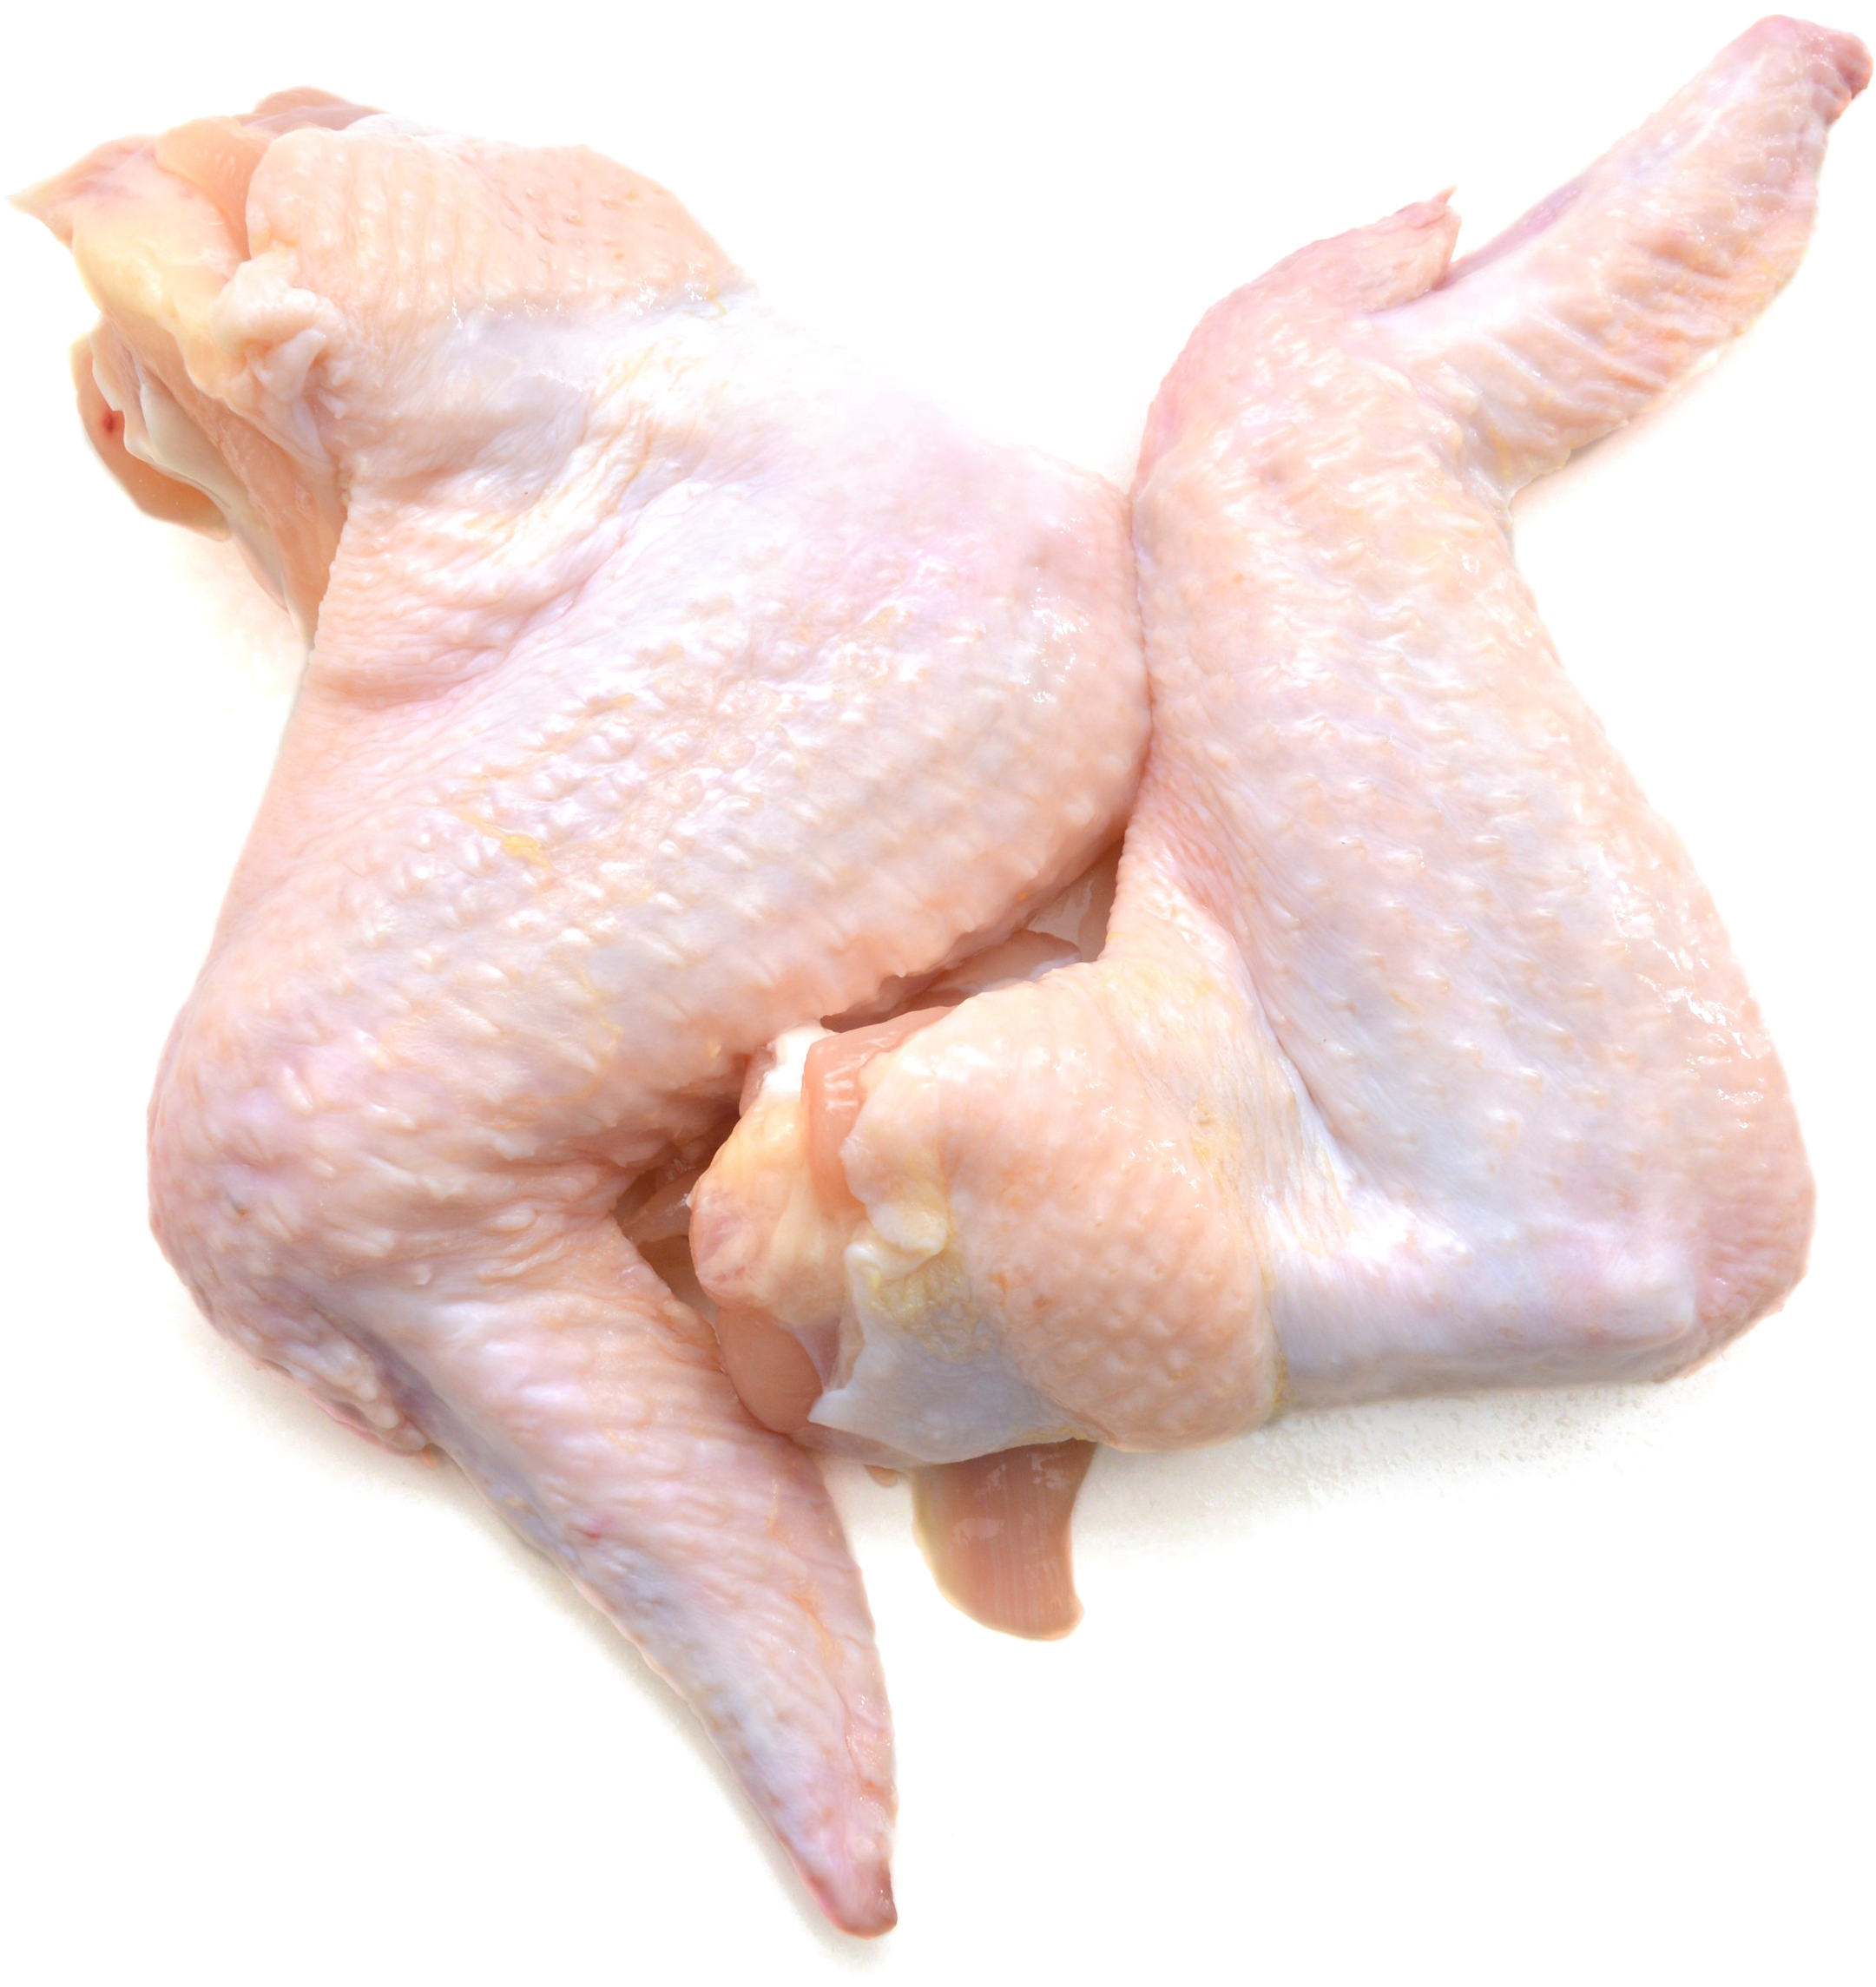 A Close Up Of A Chicken